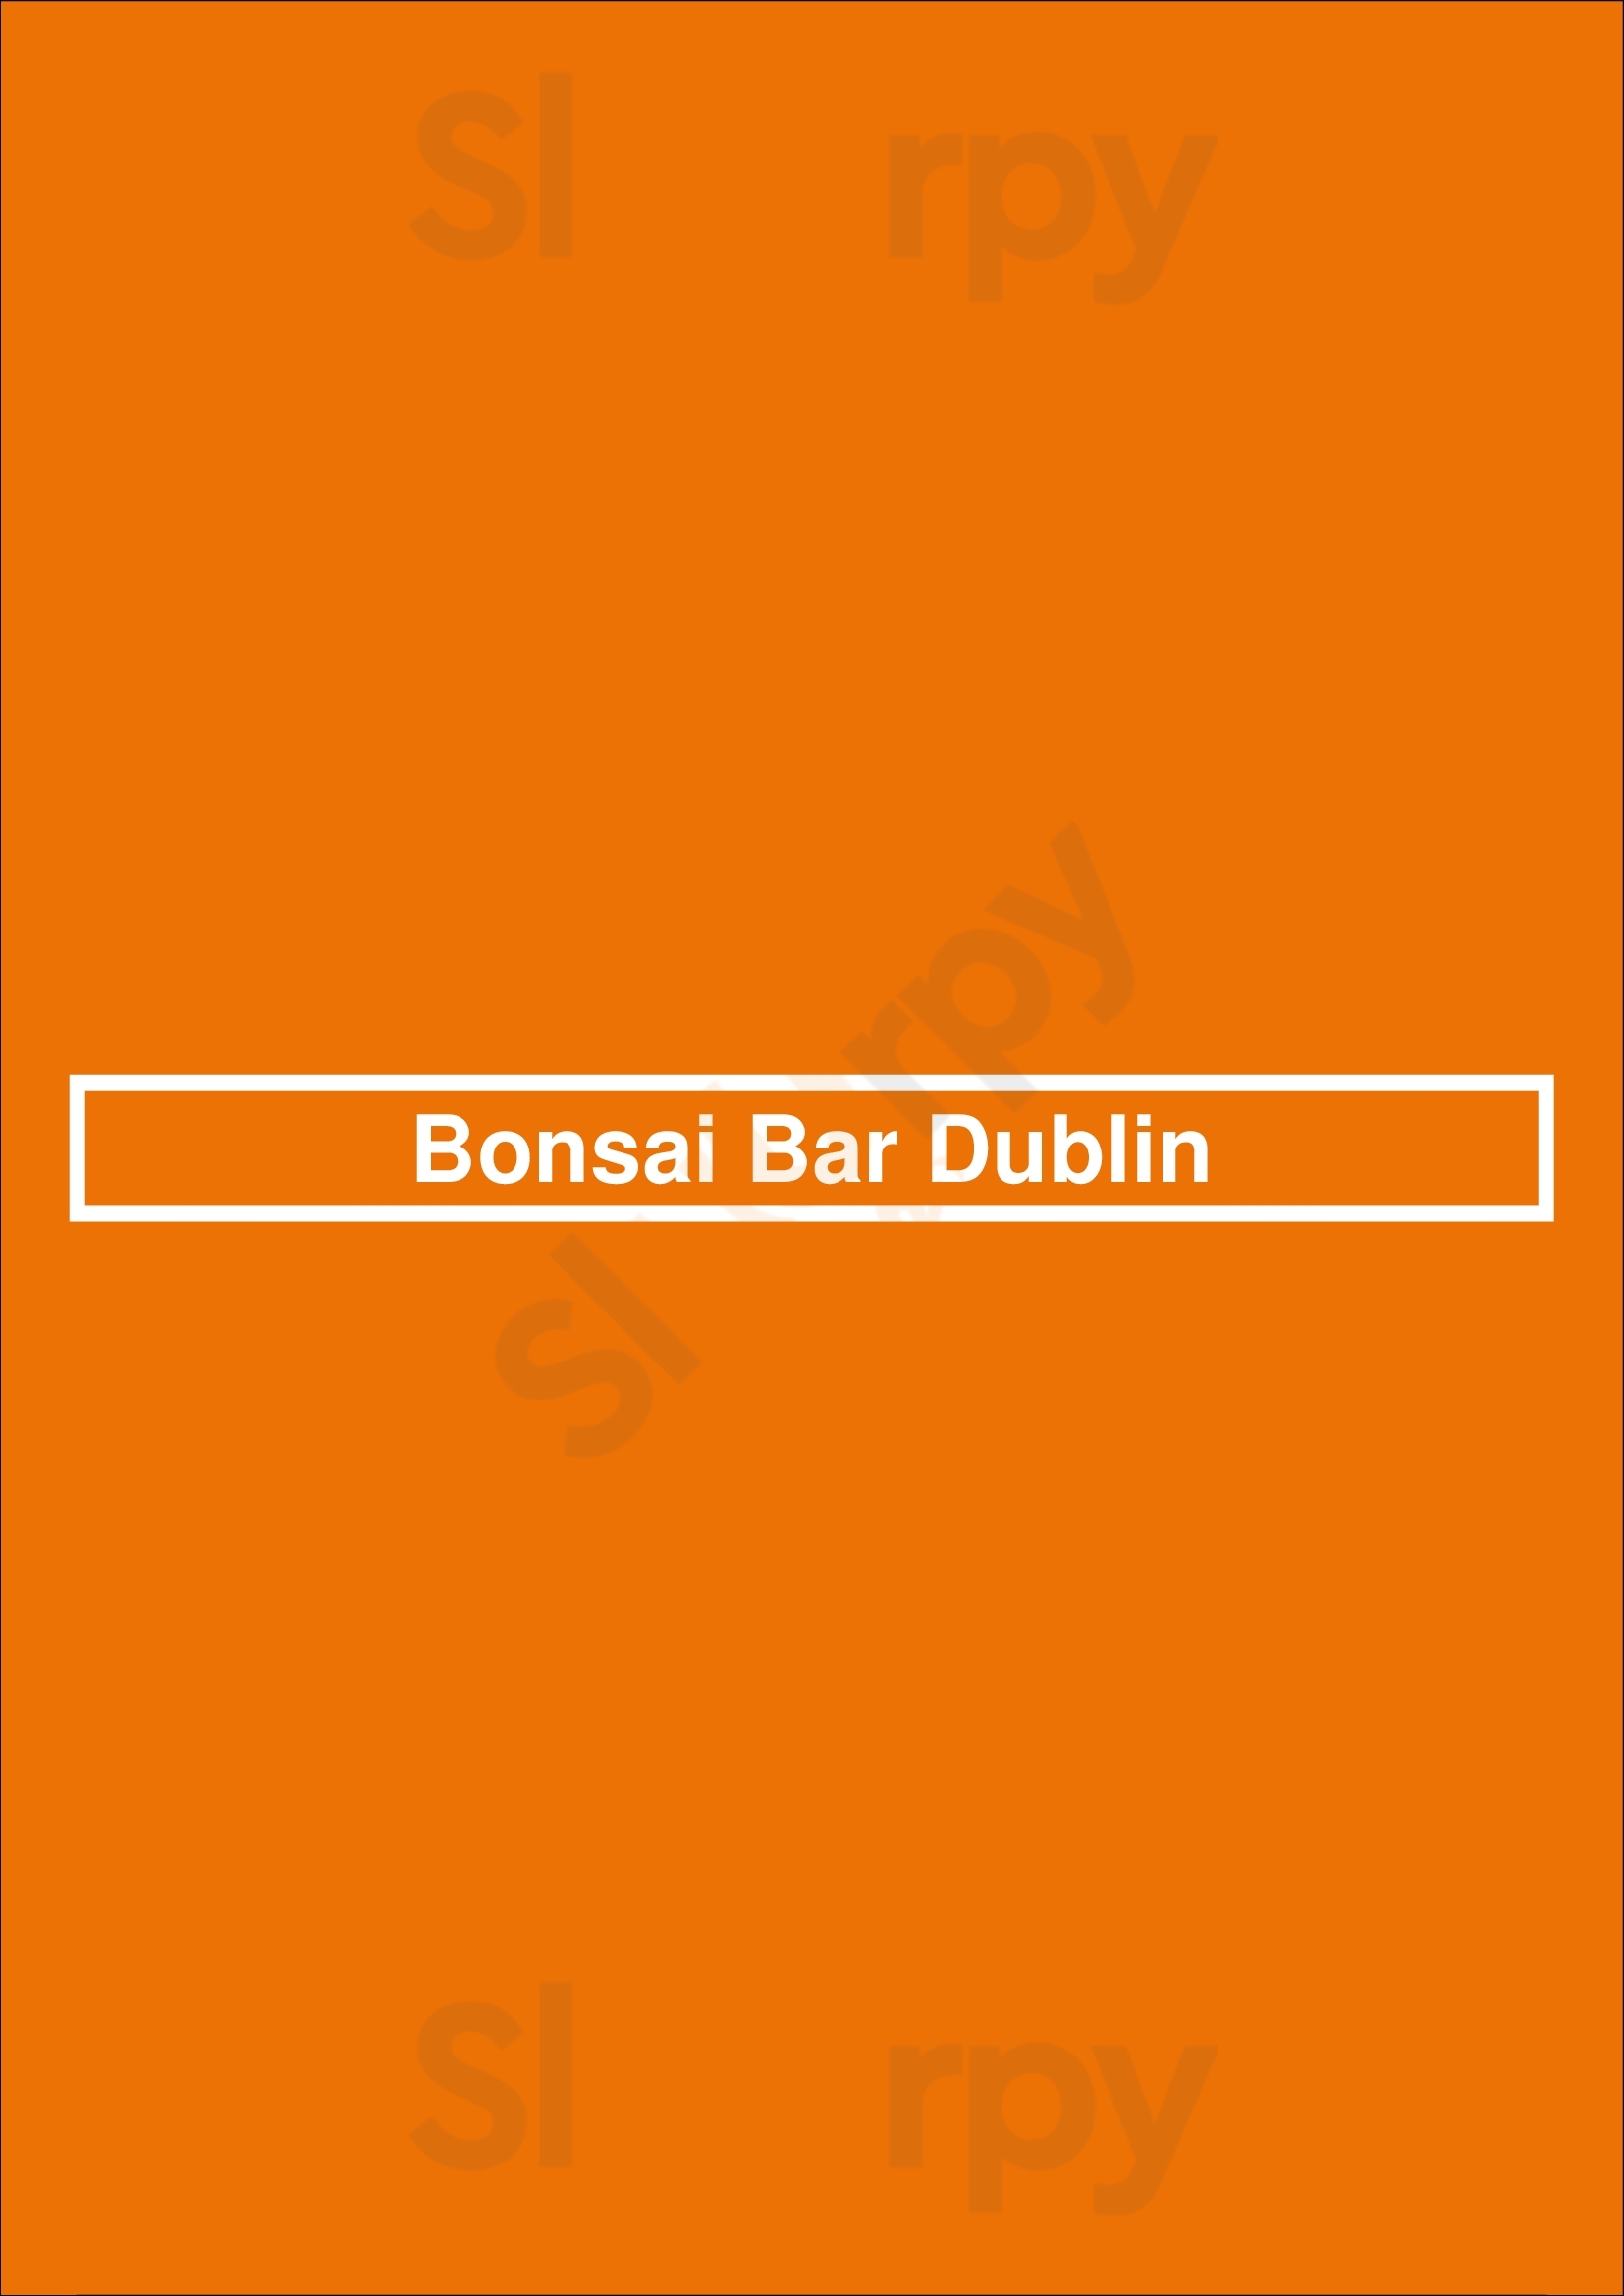 Bonsai Bar Dublin Dublin Menu - 1